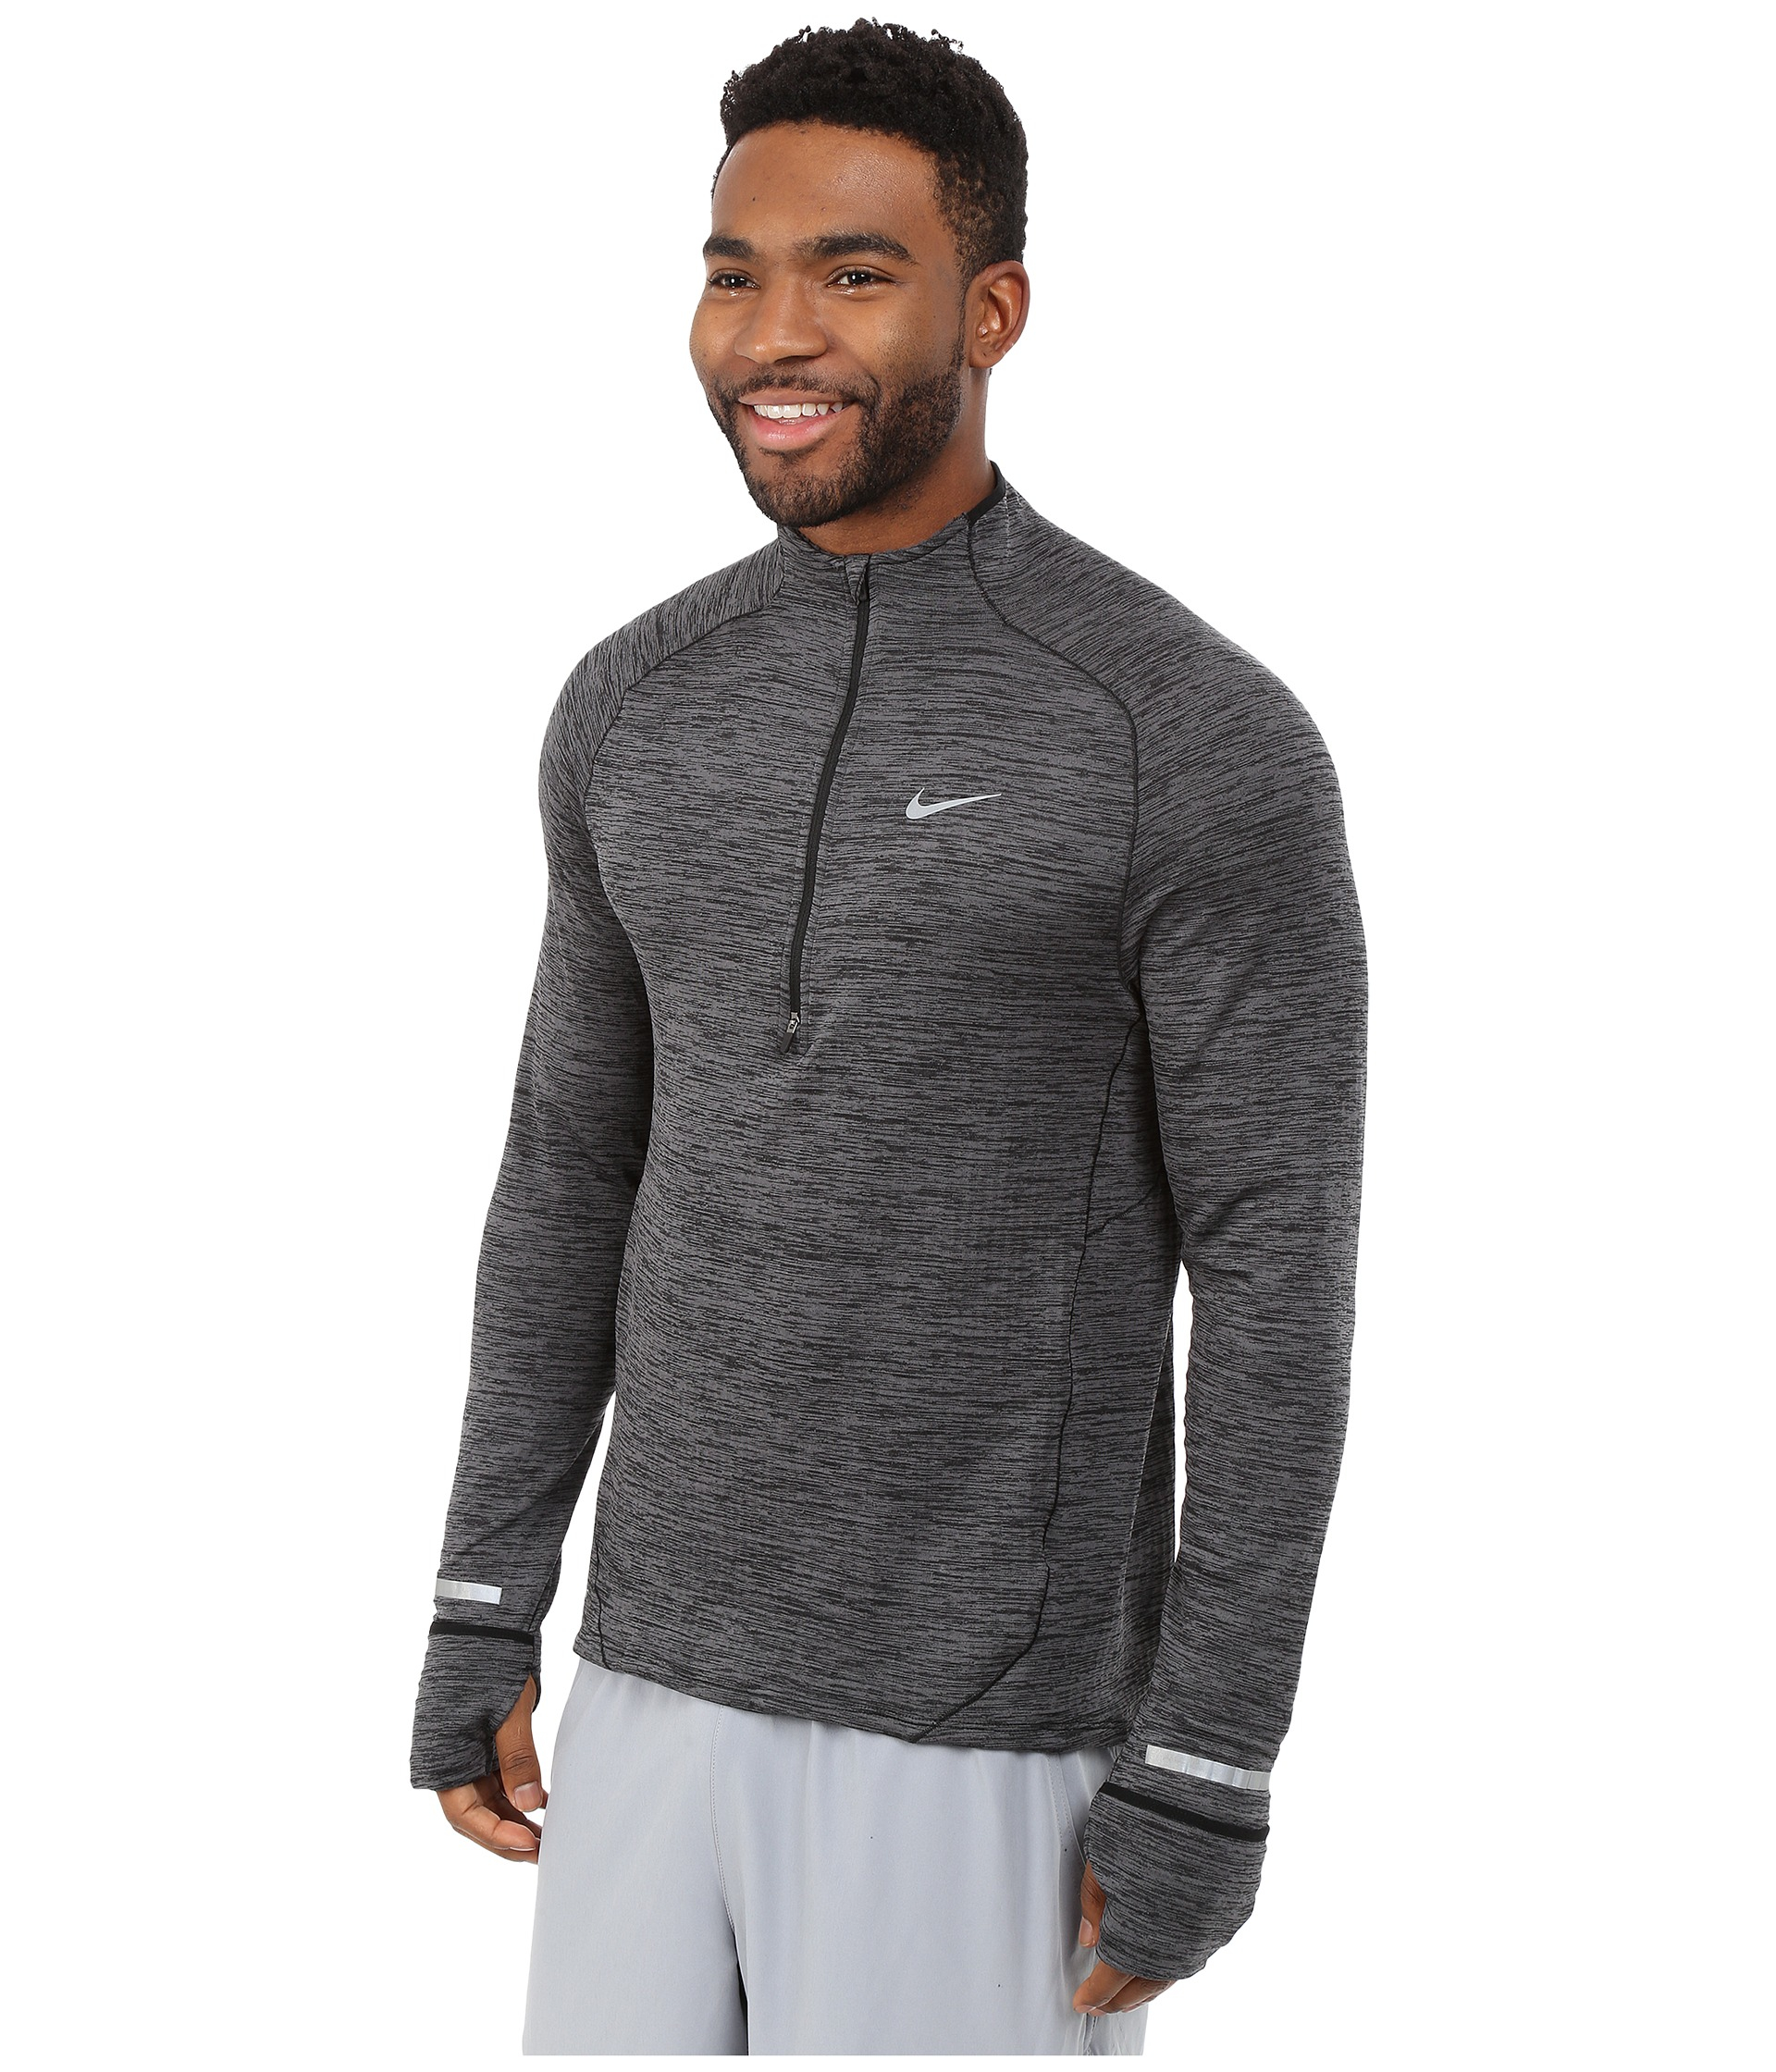 Lyst - Nike Element Sphere Half-zip in Black for Men